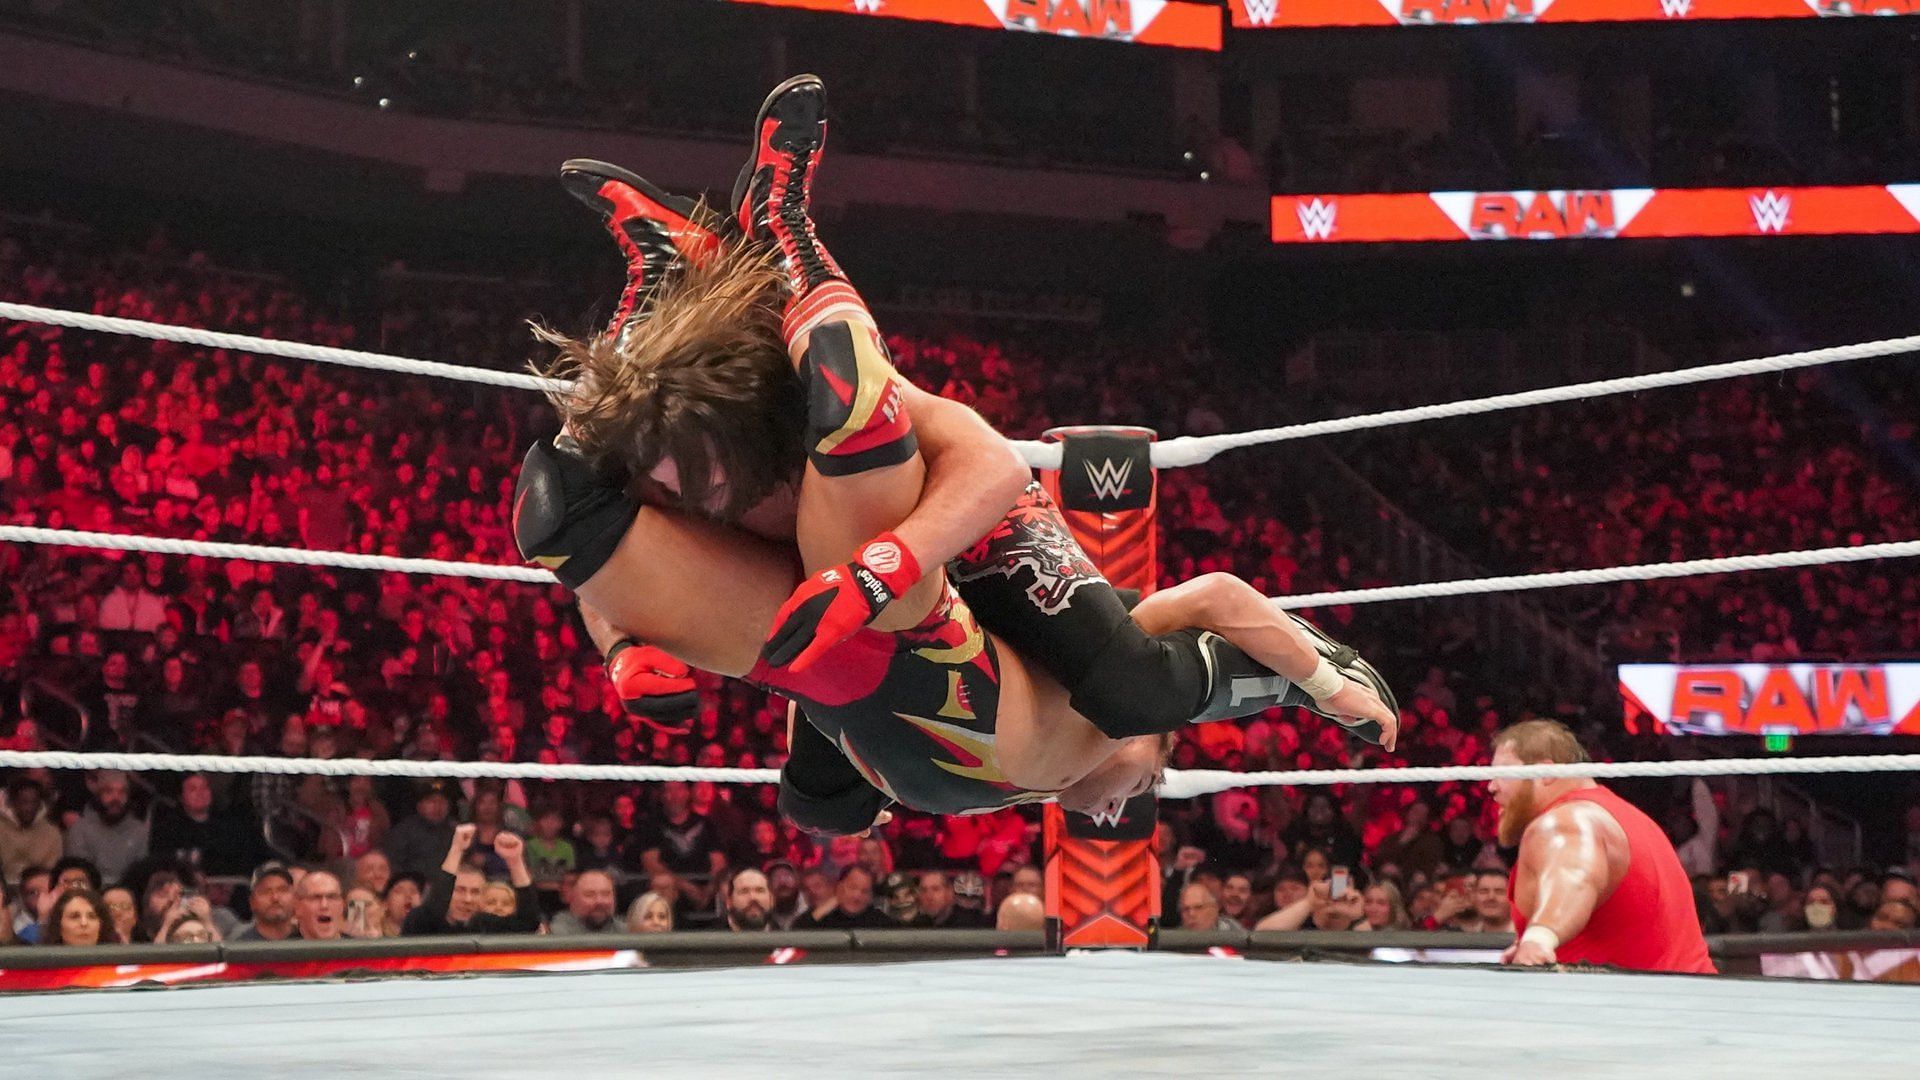 AJ Styles hitting The Styles Clash